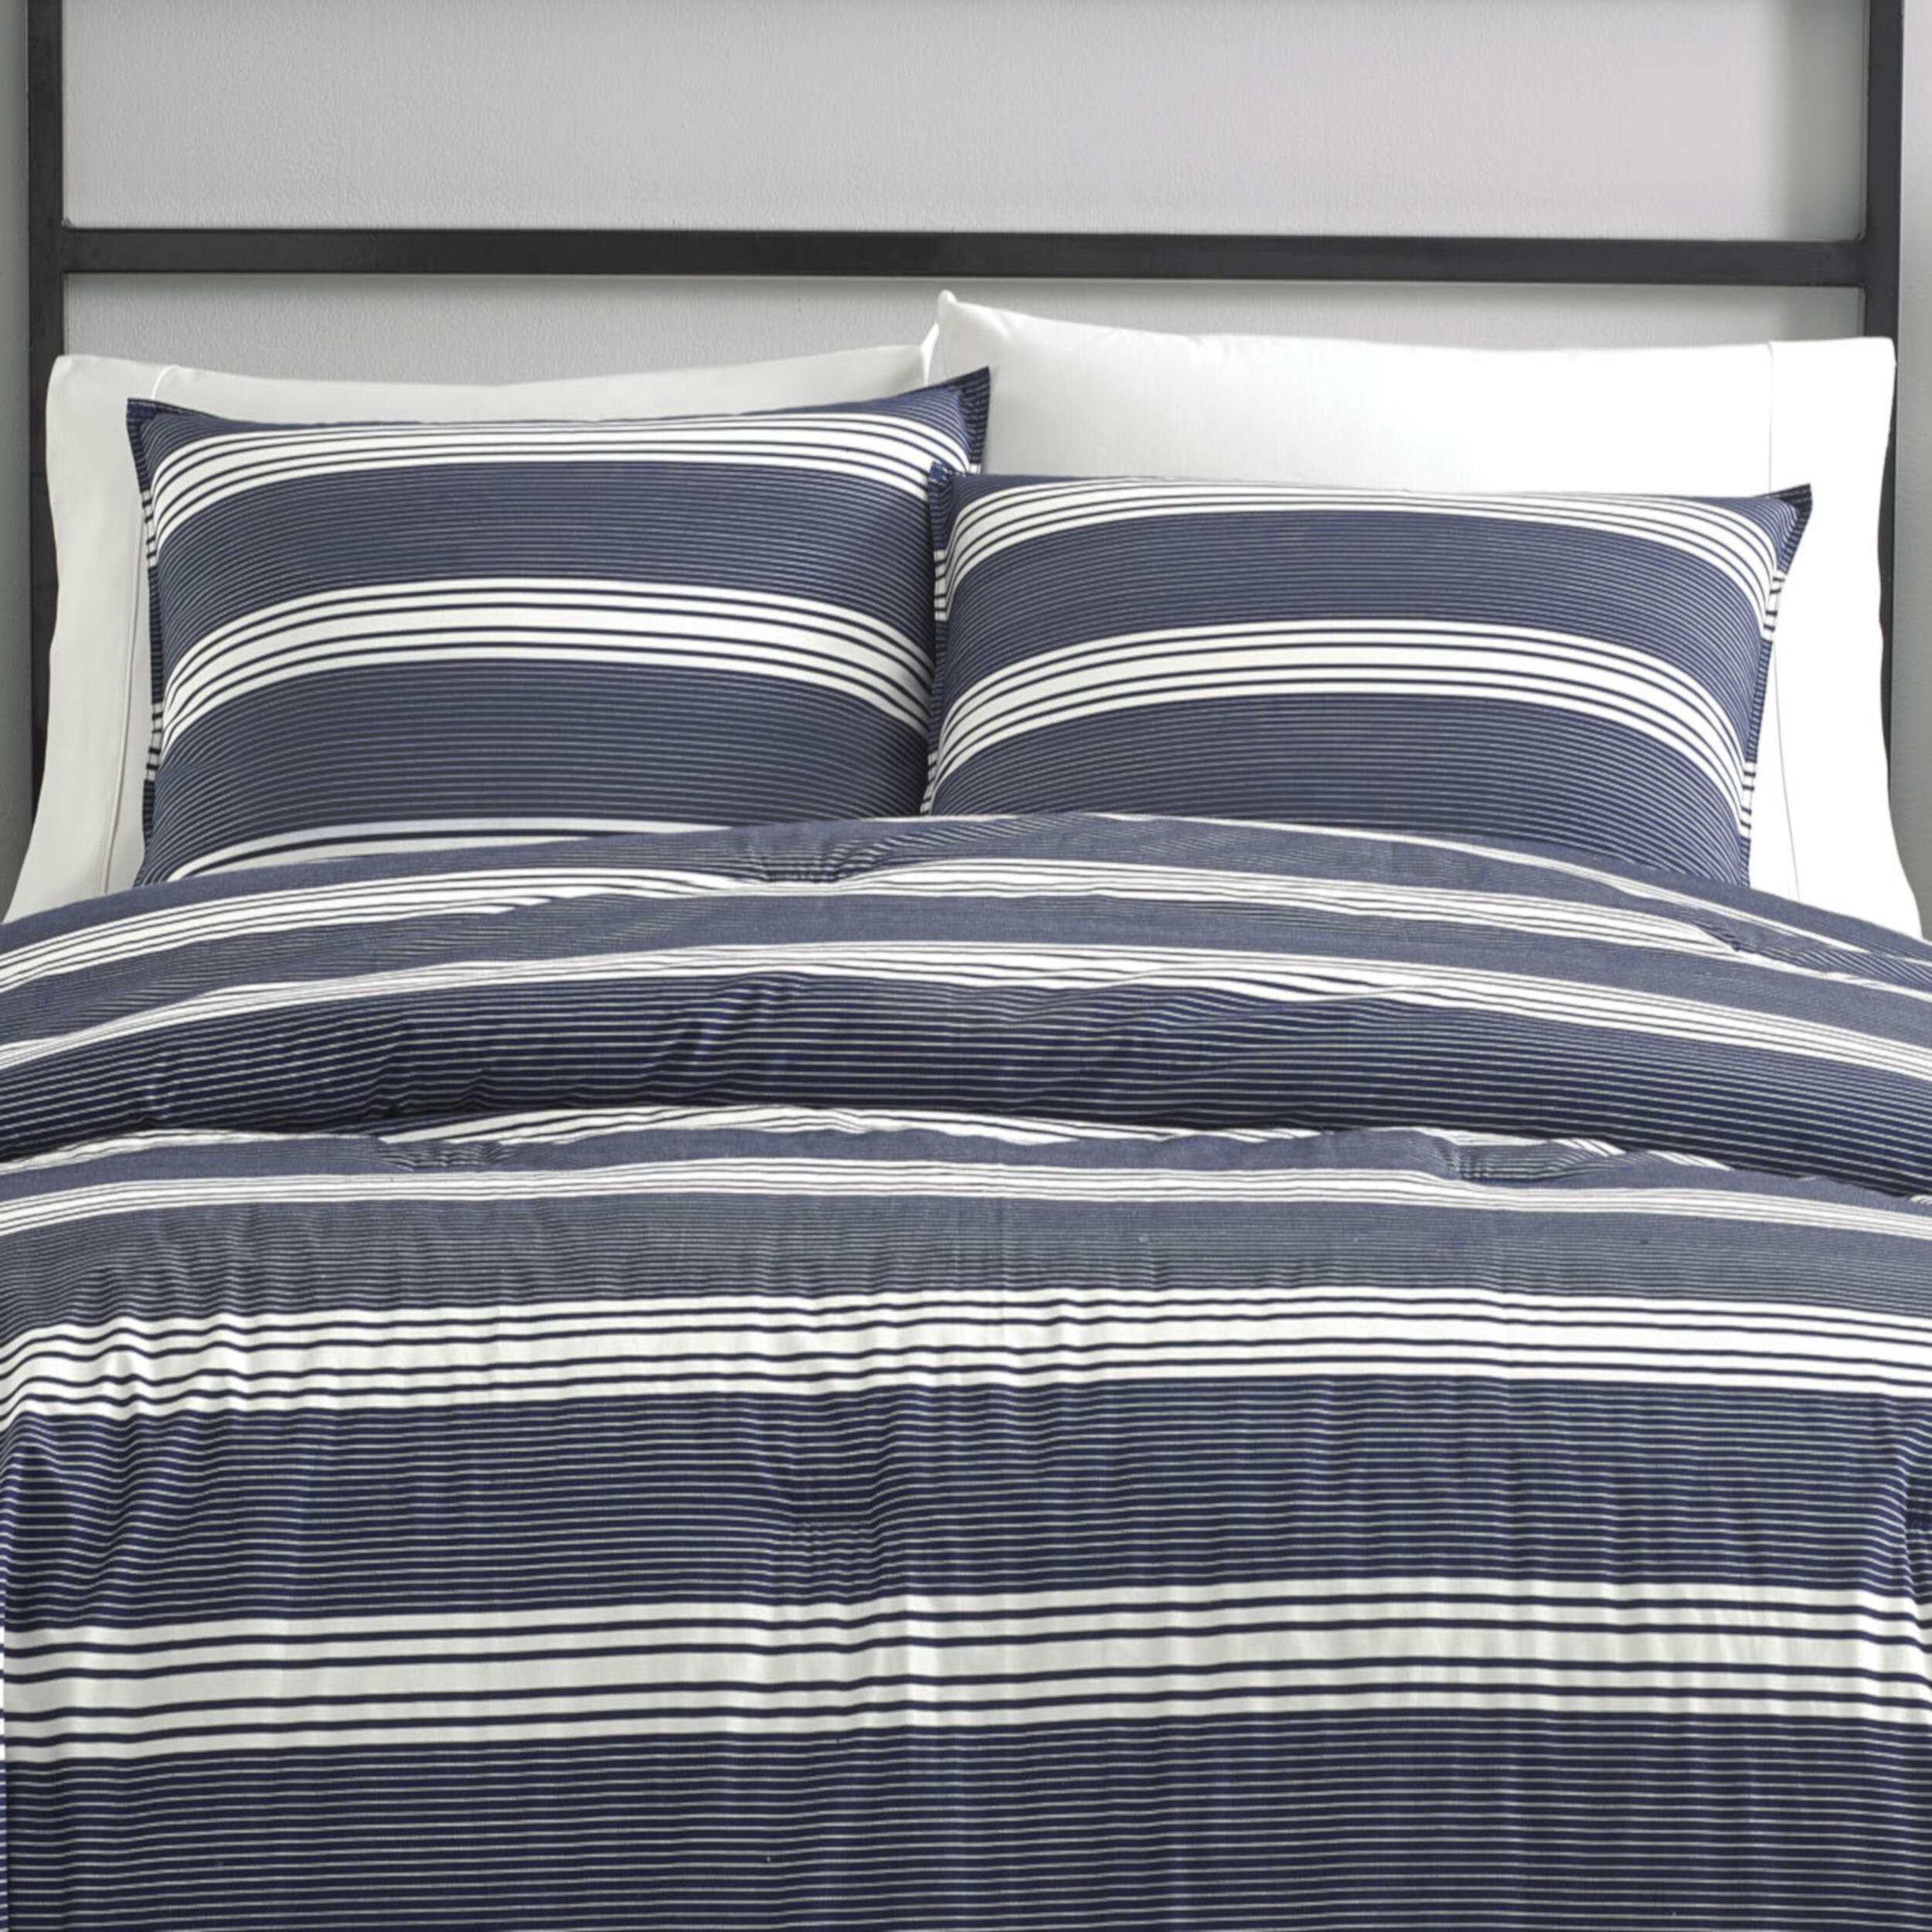 Nautica Longpoint Comforter And Pillow Sham Set, Bedding Sets, Household